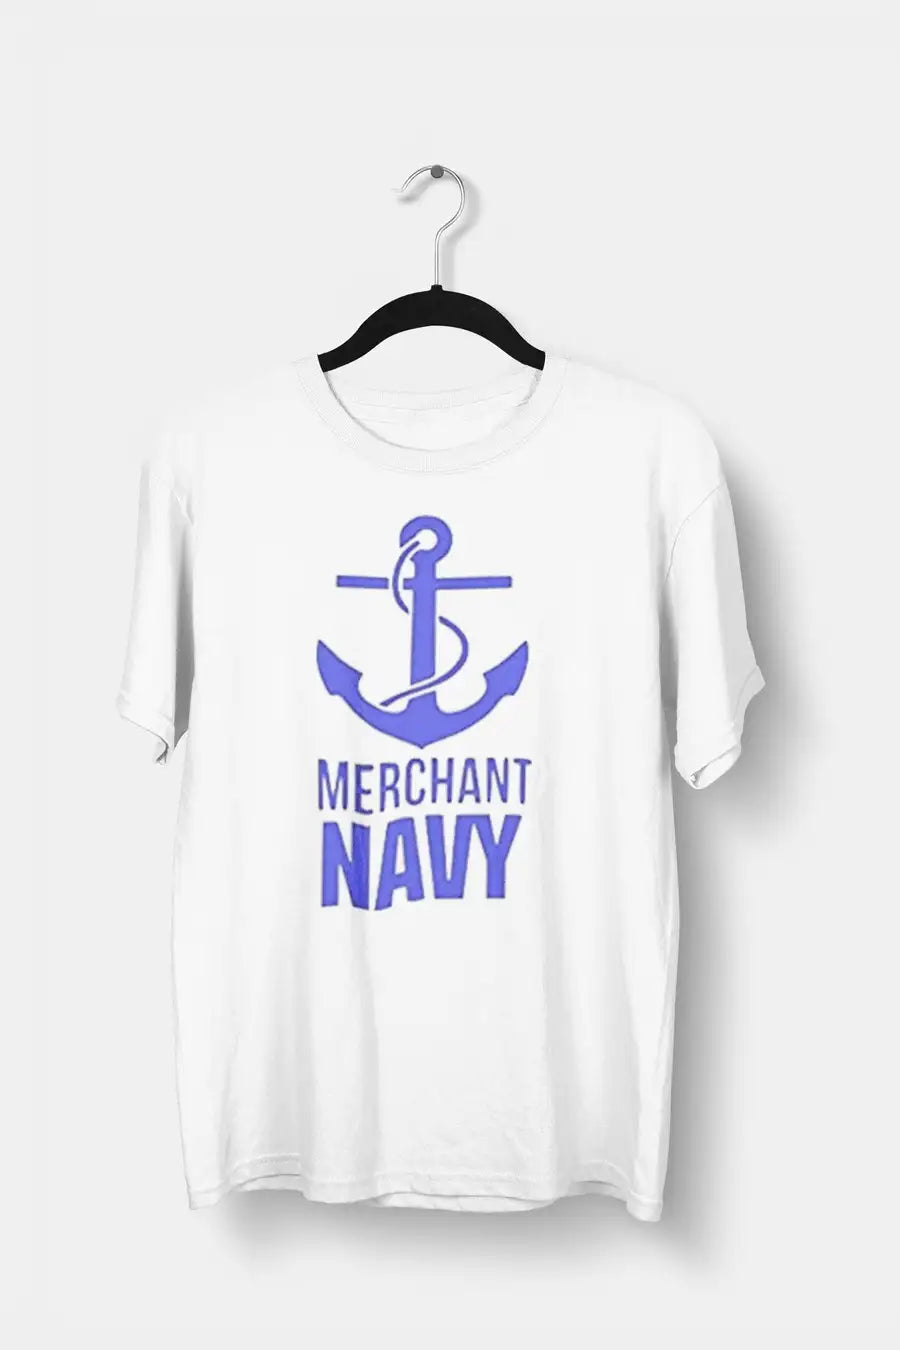 Merchant Navy Exclusive Custom T Shirt For Men | Premium Design | Catch My Drift India - Catch My Drift India Clothing clothing, made in india, merchant, navy, shirt, t shirt, tshirt, white